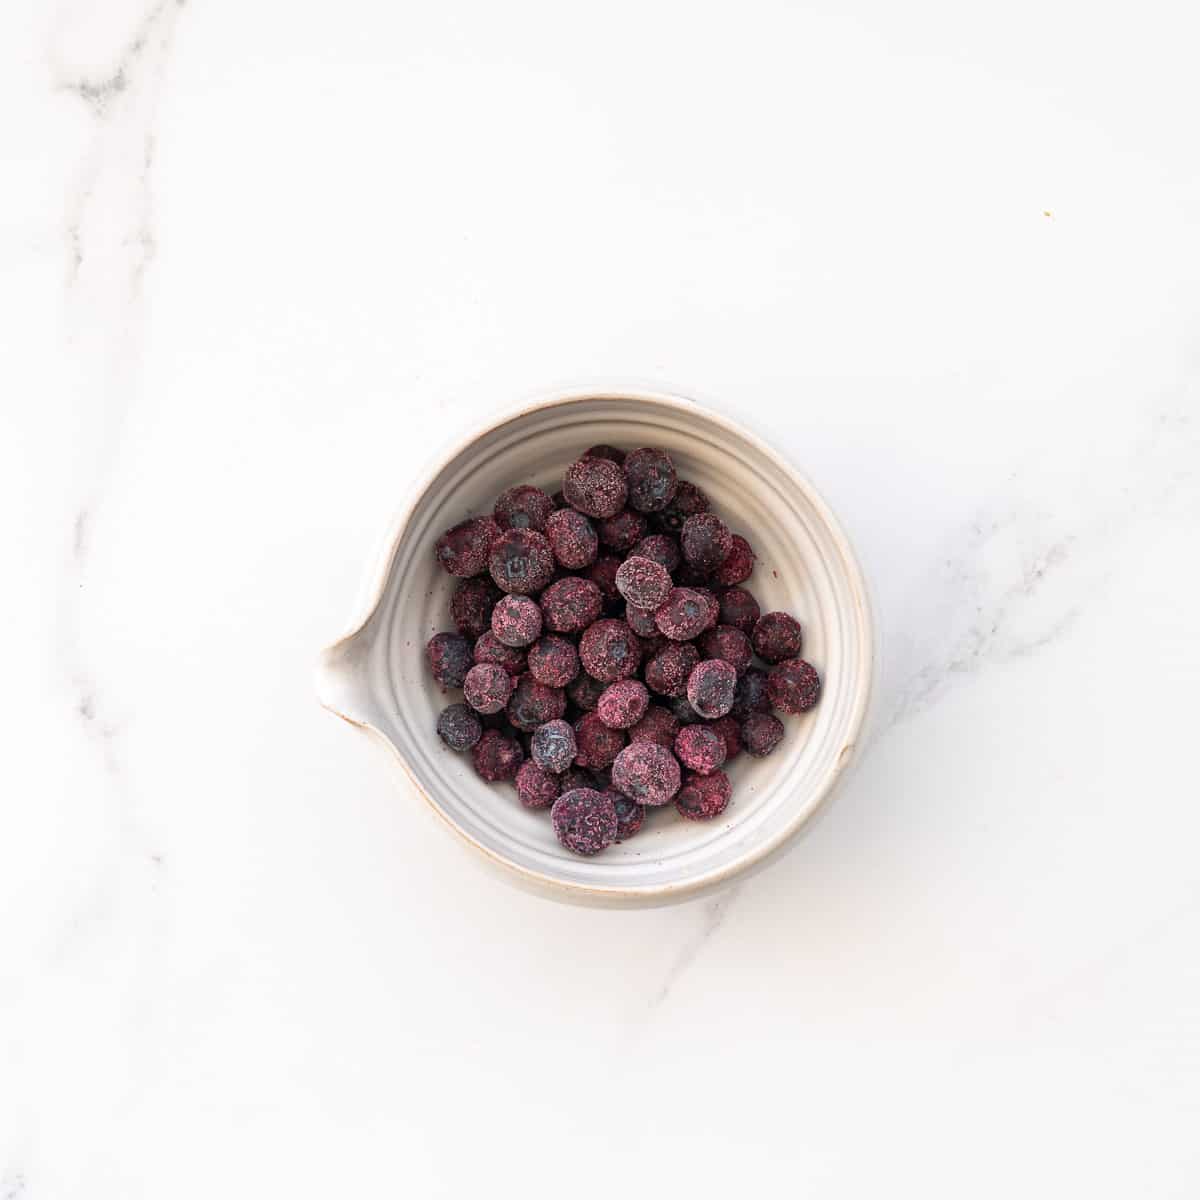 A white ceramic bowl of frozen blueberries.